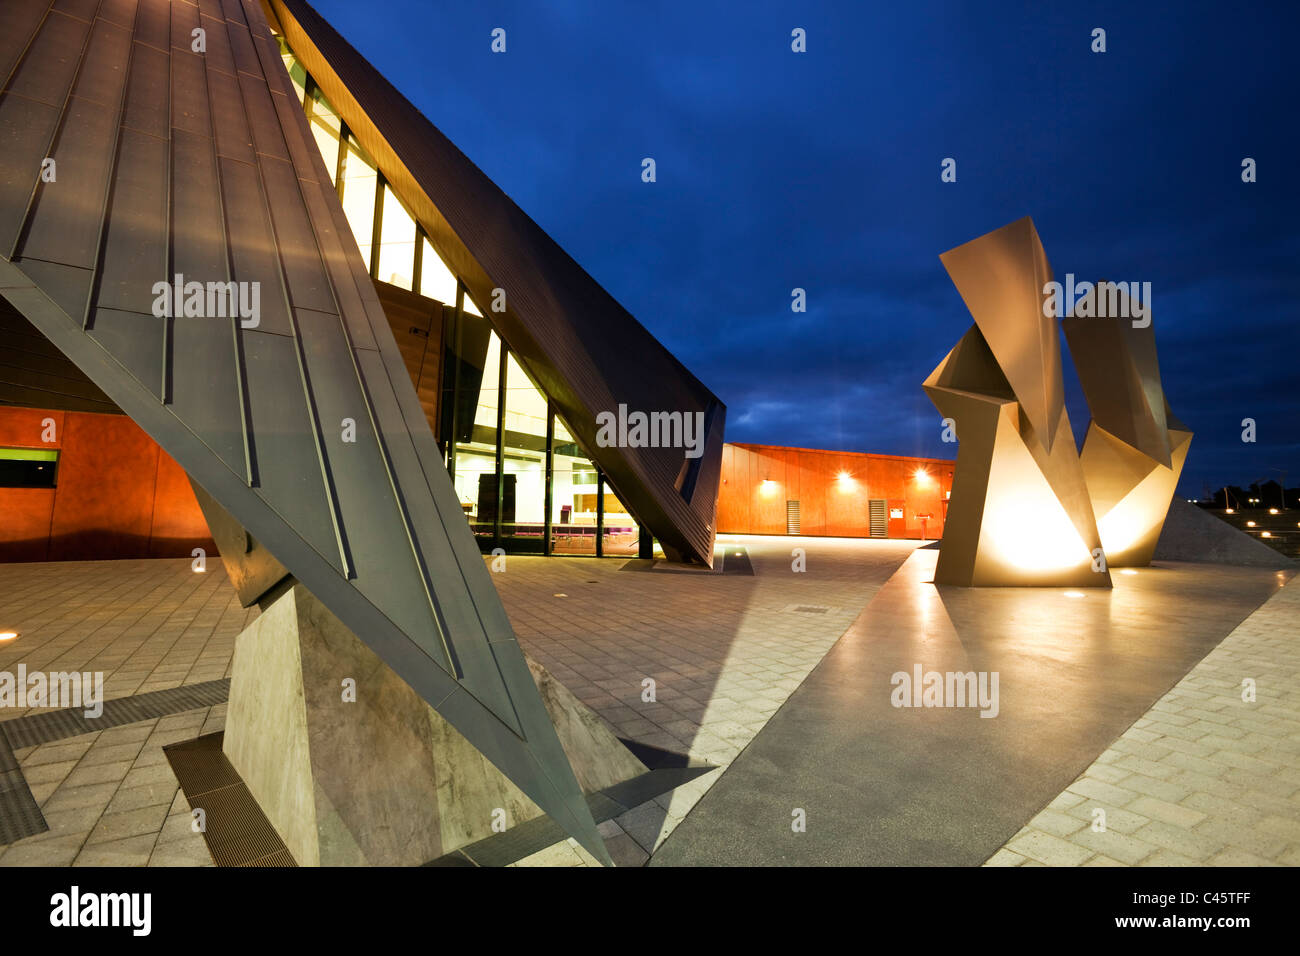 The Albany Entertainment Centre. Albany, Western Australia, Australia Stock Photo